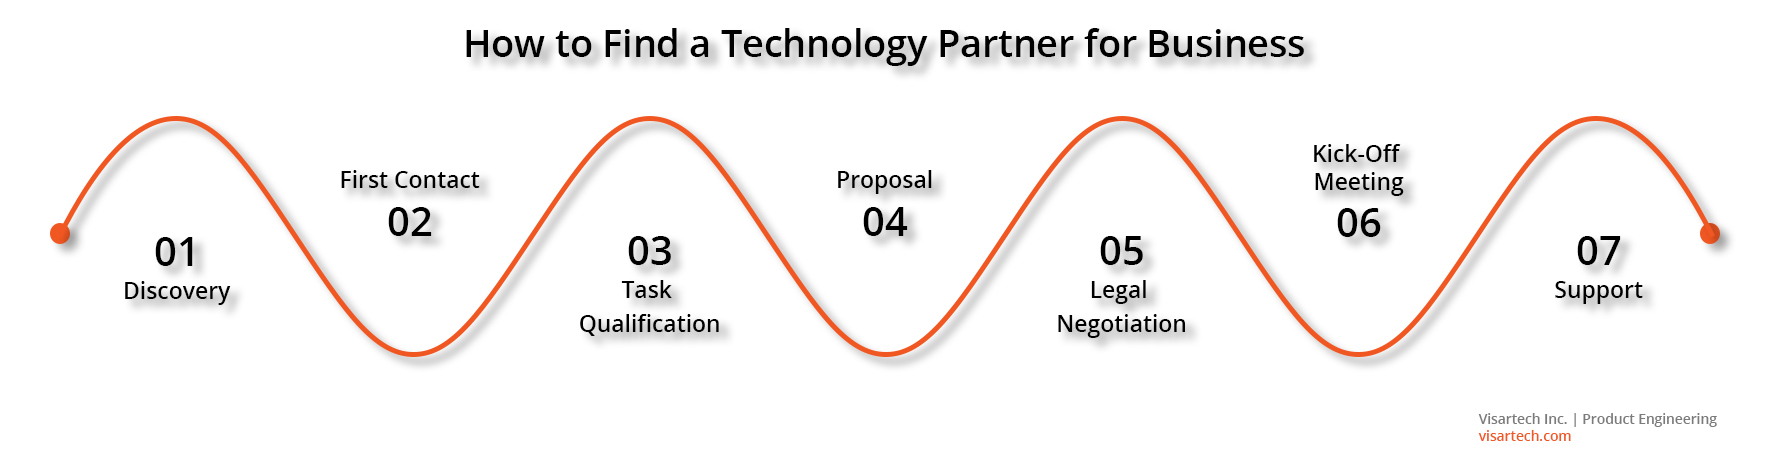 How to Find a Technology Partner for Business - Visartech Blog